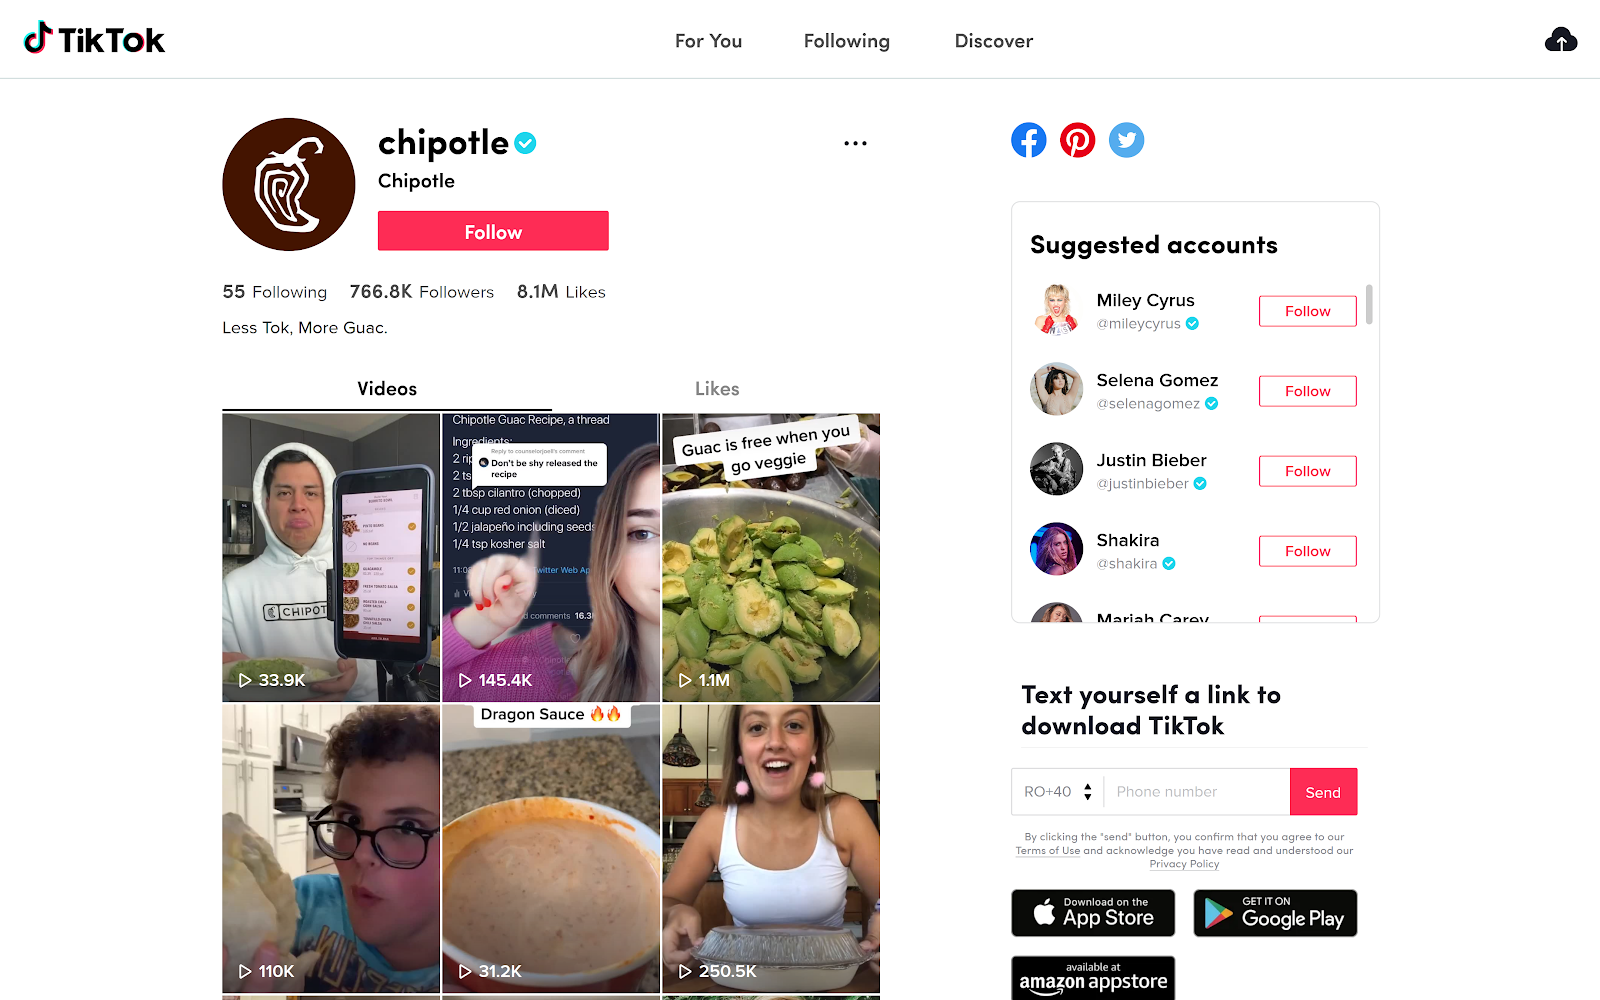 Chipotle’s Successful and Innovative TikTok Campaign